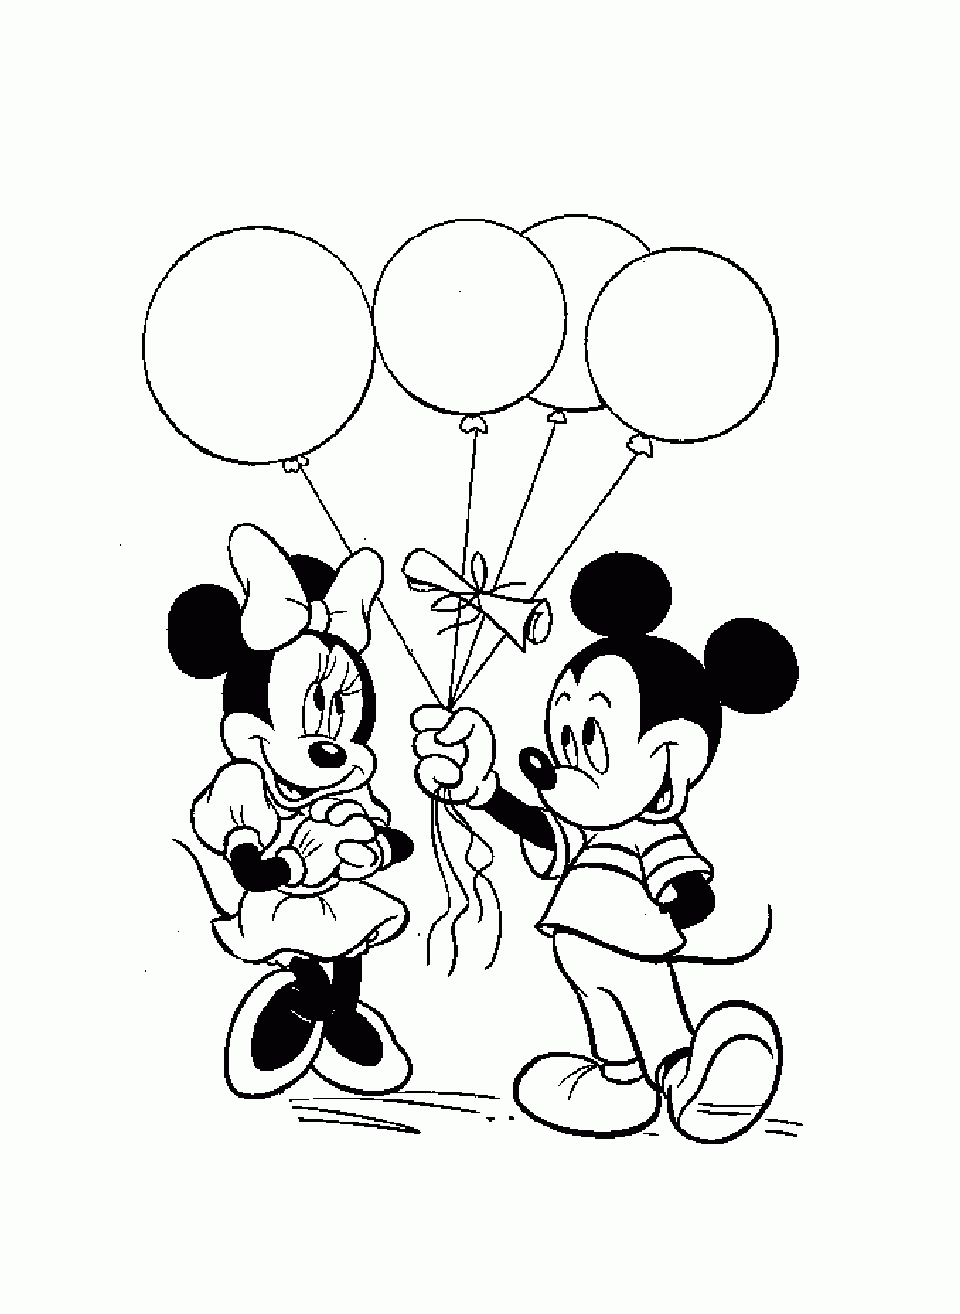 Dessin À Colorier Maison Mickey Gratuit destiné Dessin Animé Mickey Gratuit